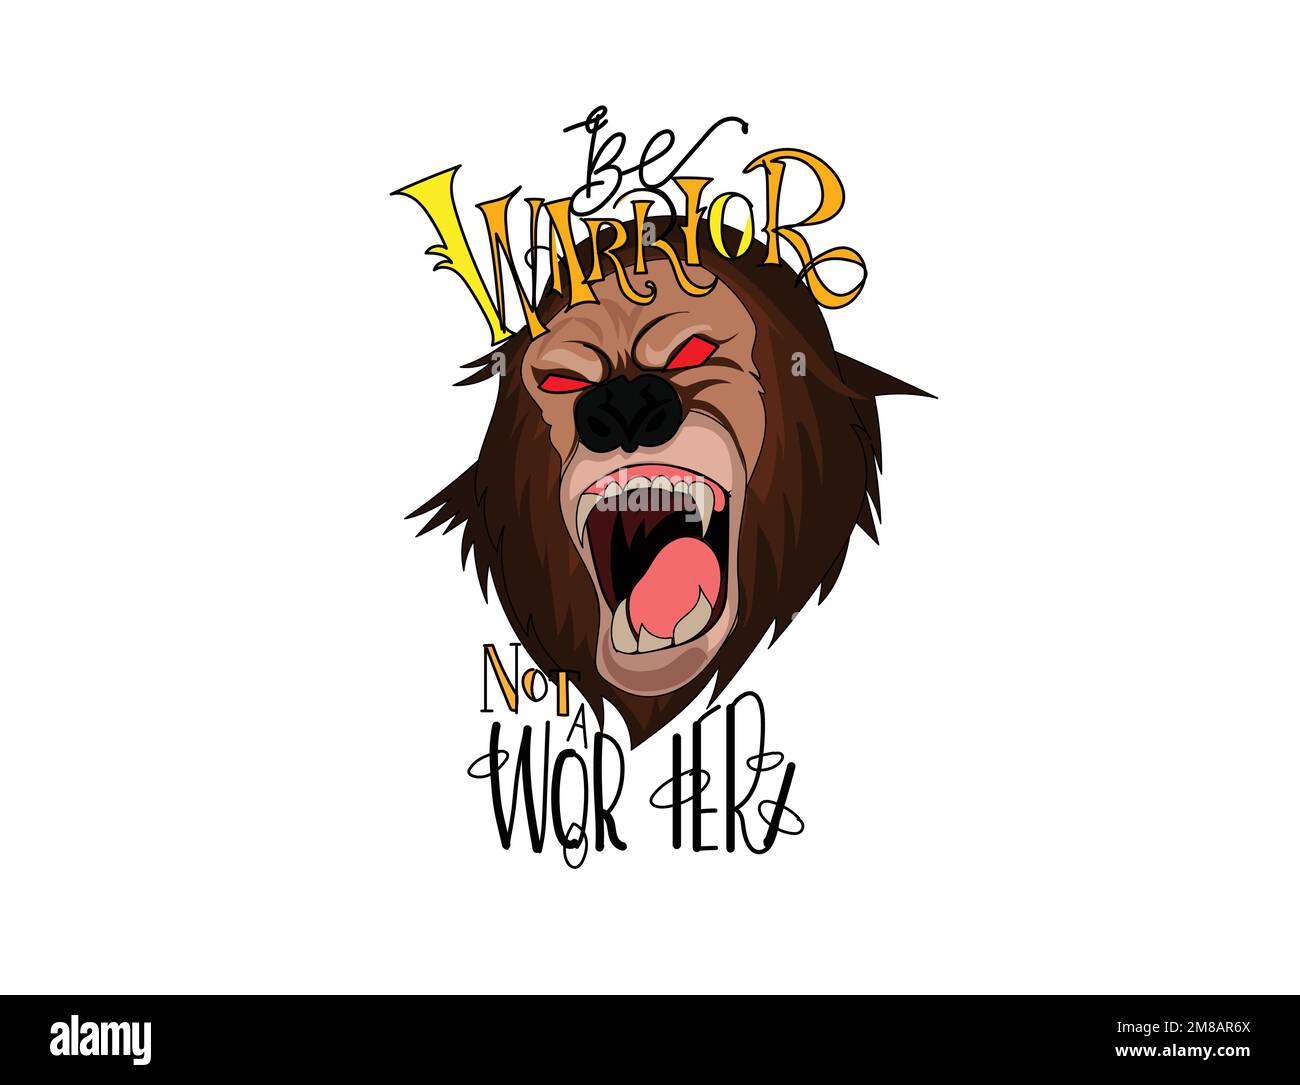 Gorilla vector illustration for t-shirt design Stock Vector